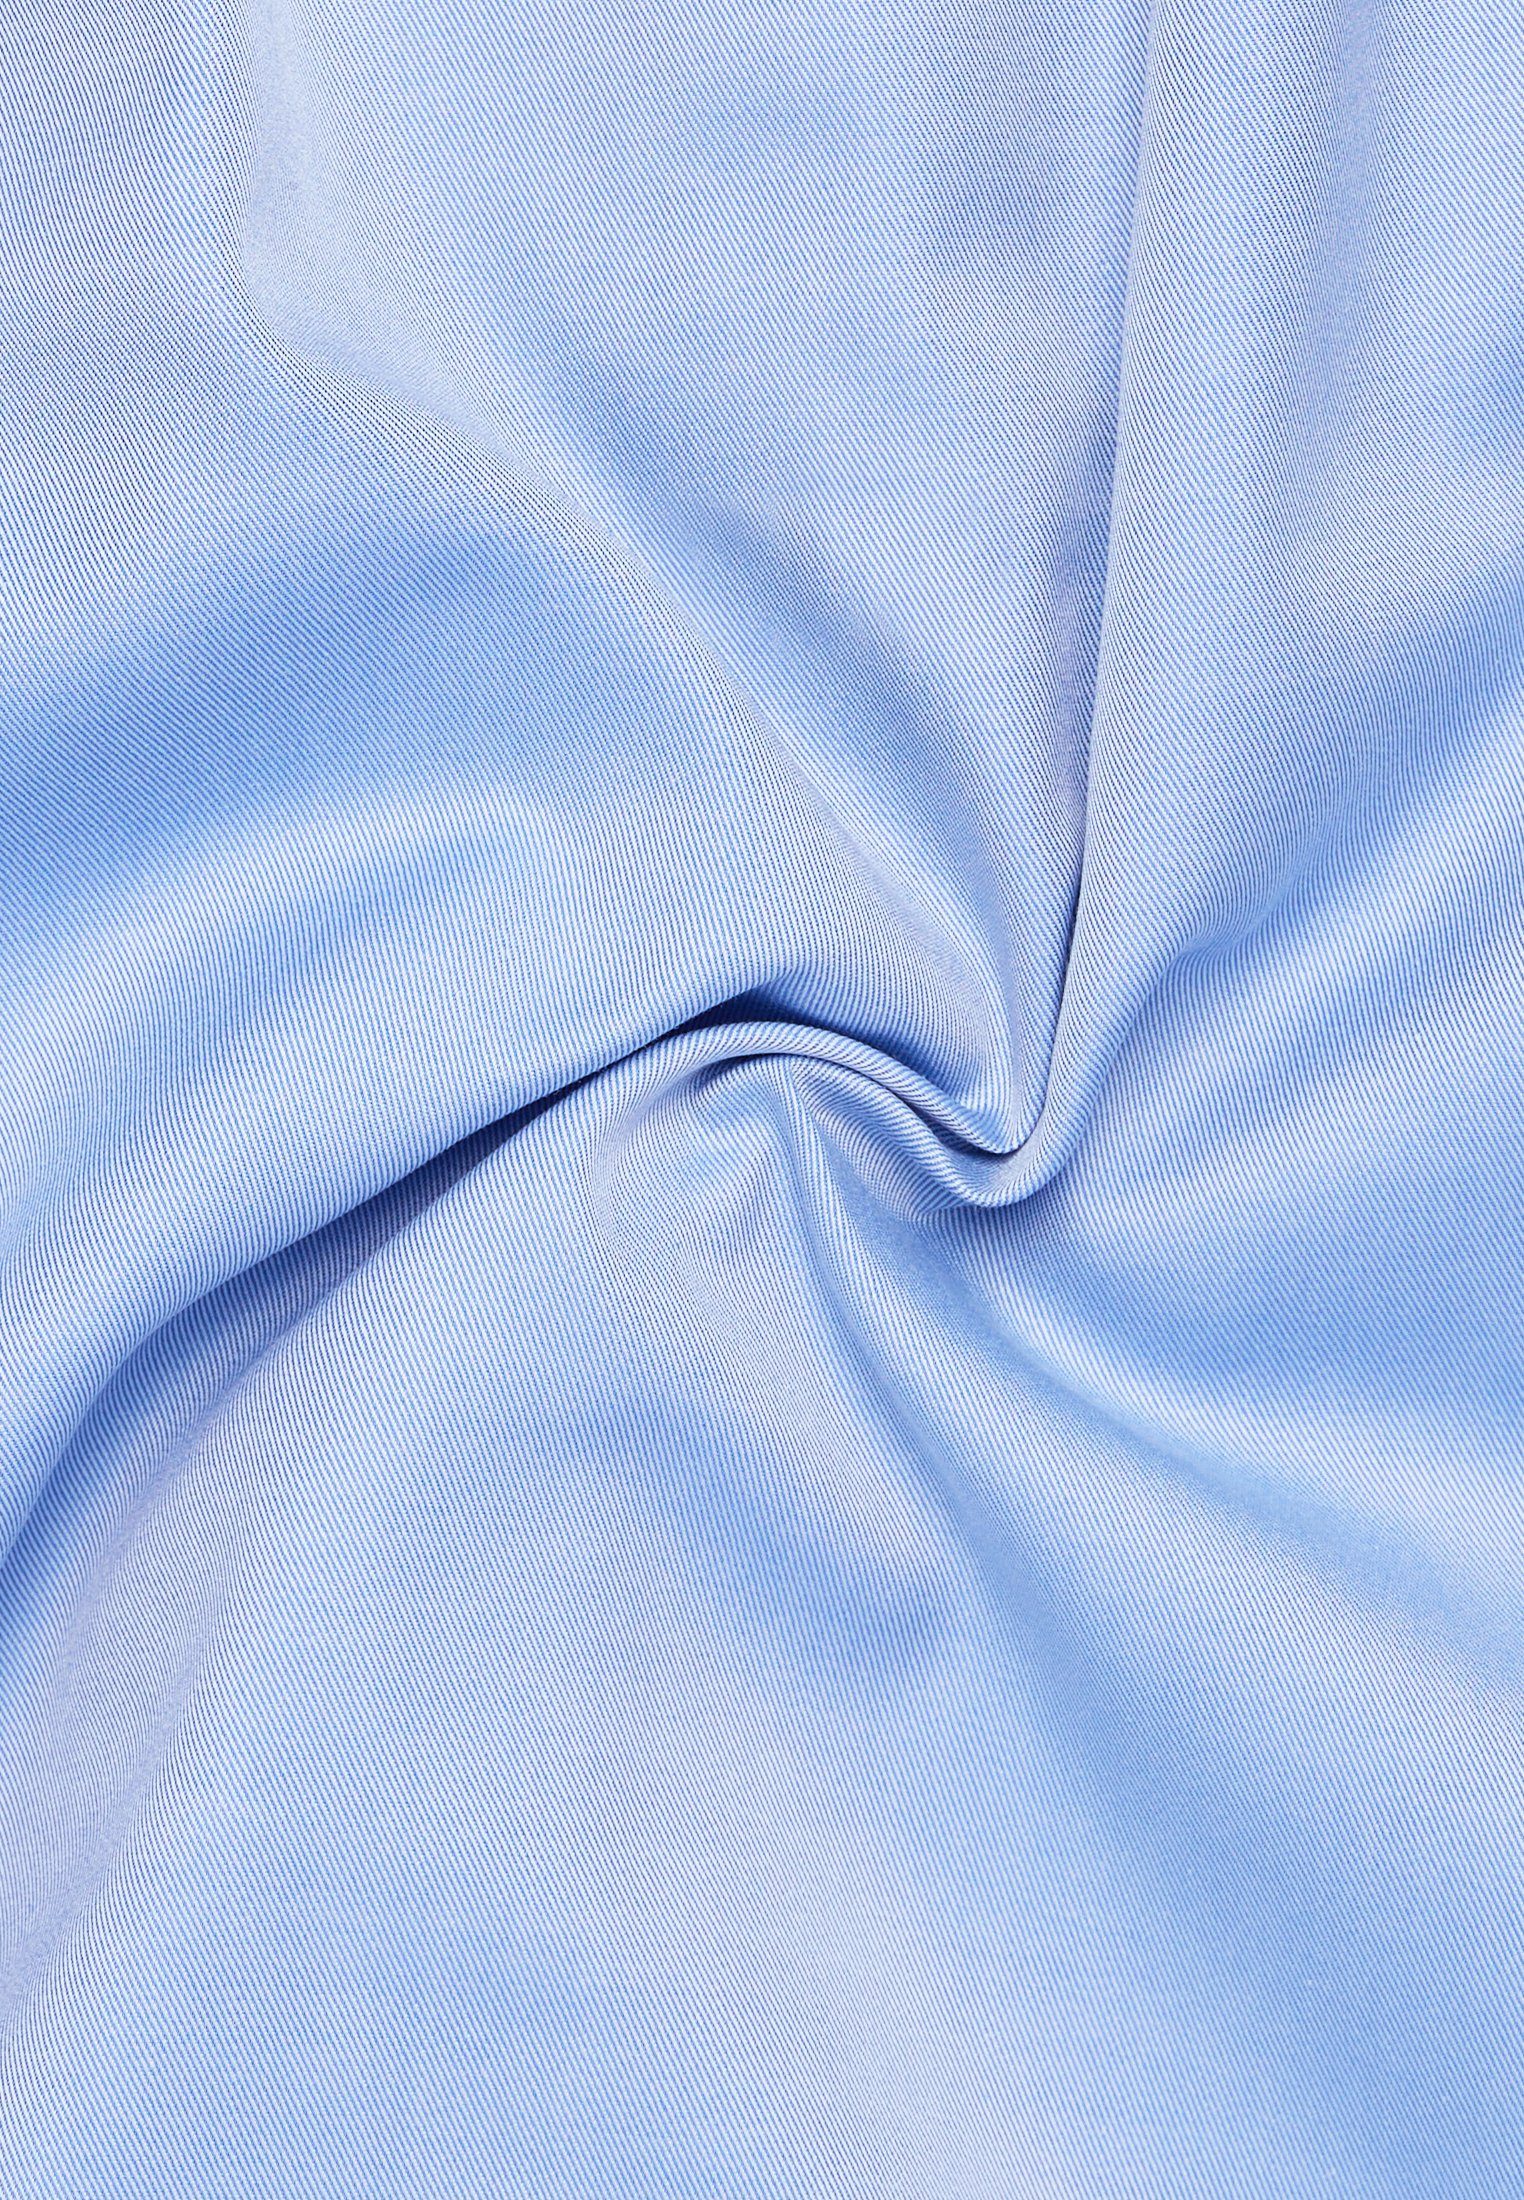 Eterna FIT blau COMFORT Langarmhemd